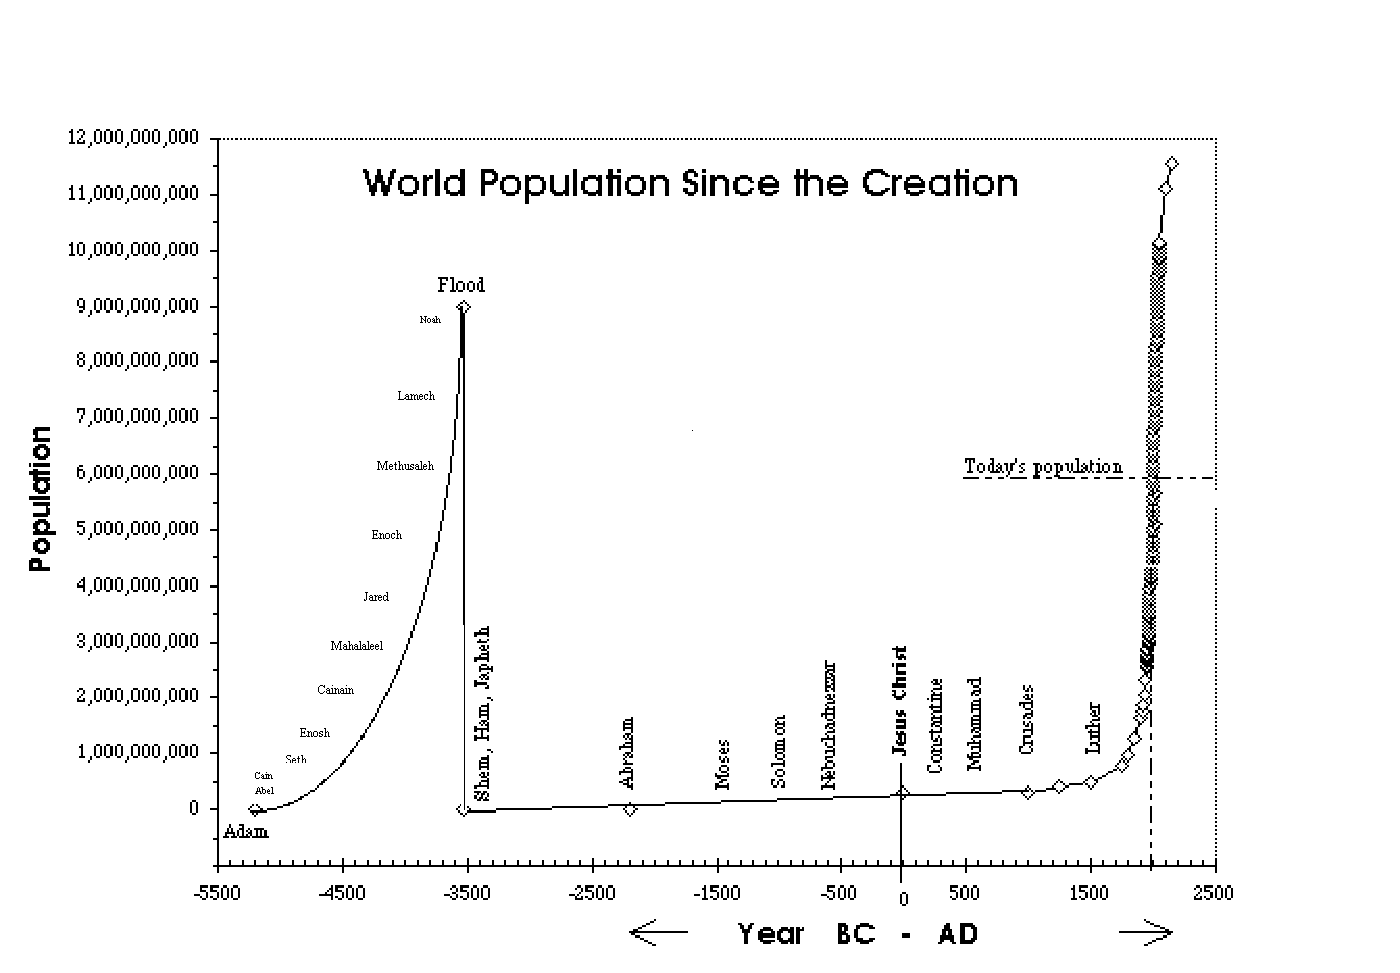 Human Population Chart